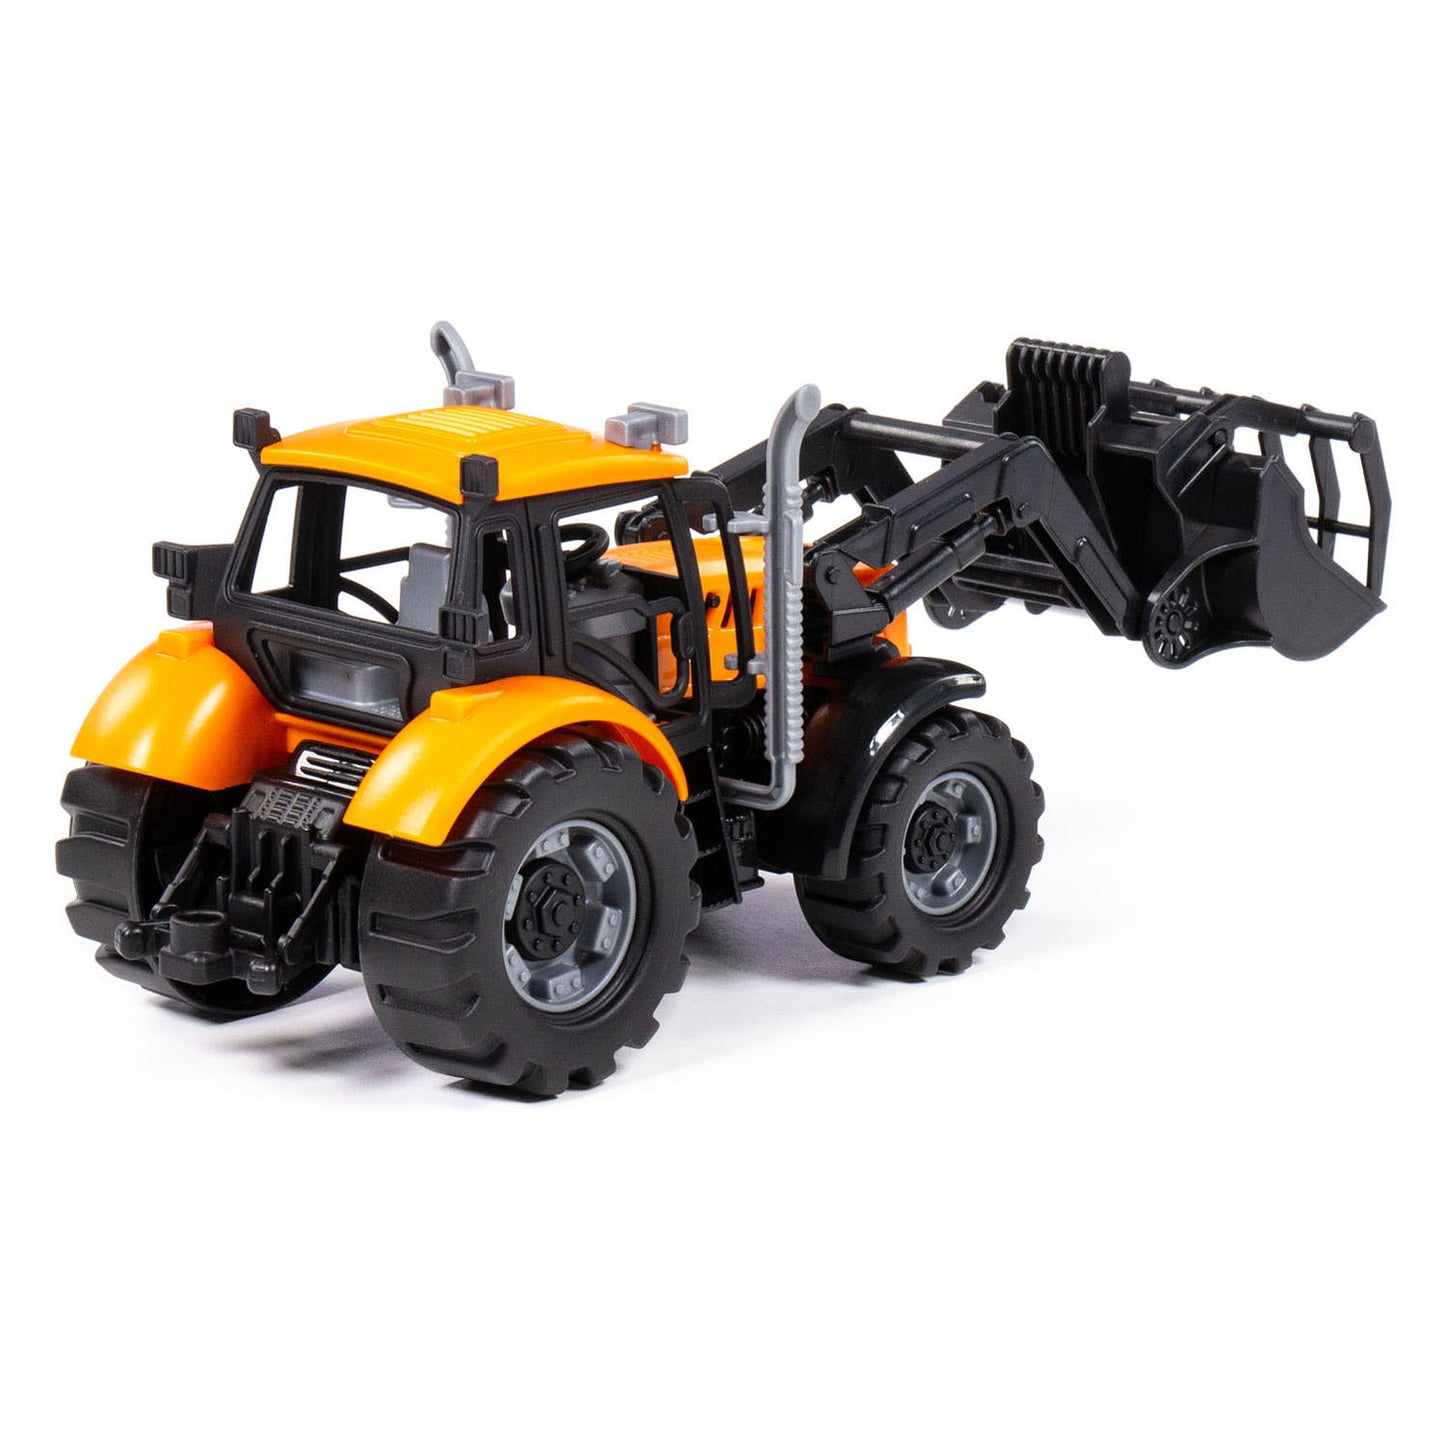 Cavallino Toys Tractor Cavallino con cargador amarillo, escala 1:32